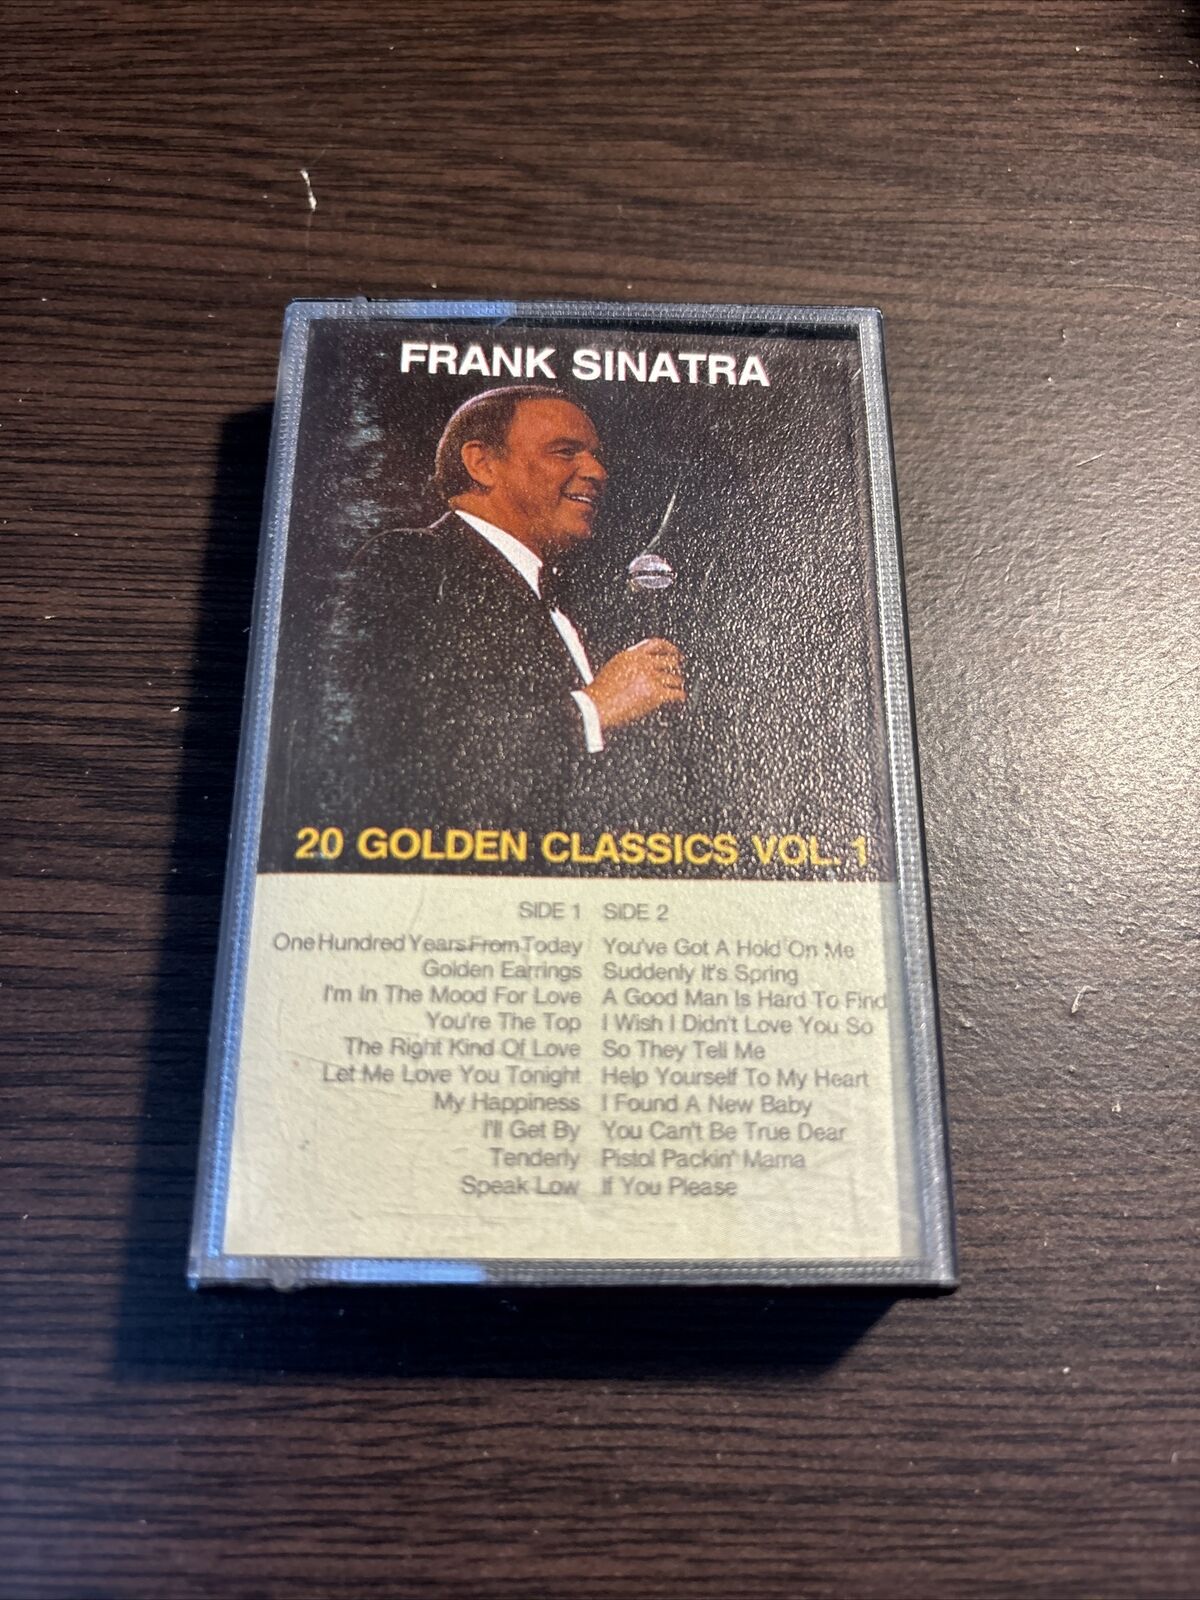 Frank Sinatra - 20 Golden Classics Vol. 1 (1984) Cassette Tape - Rat Pack